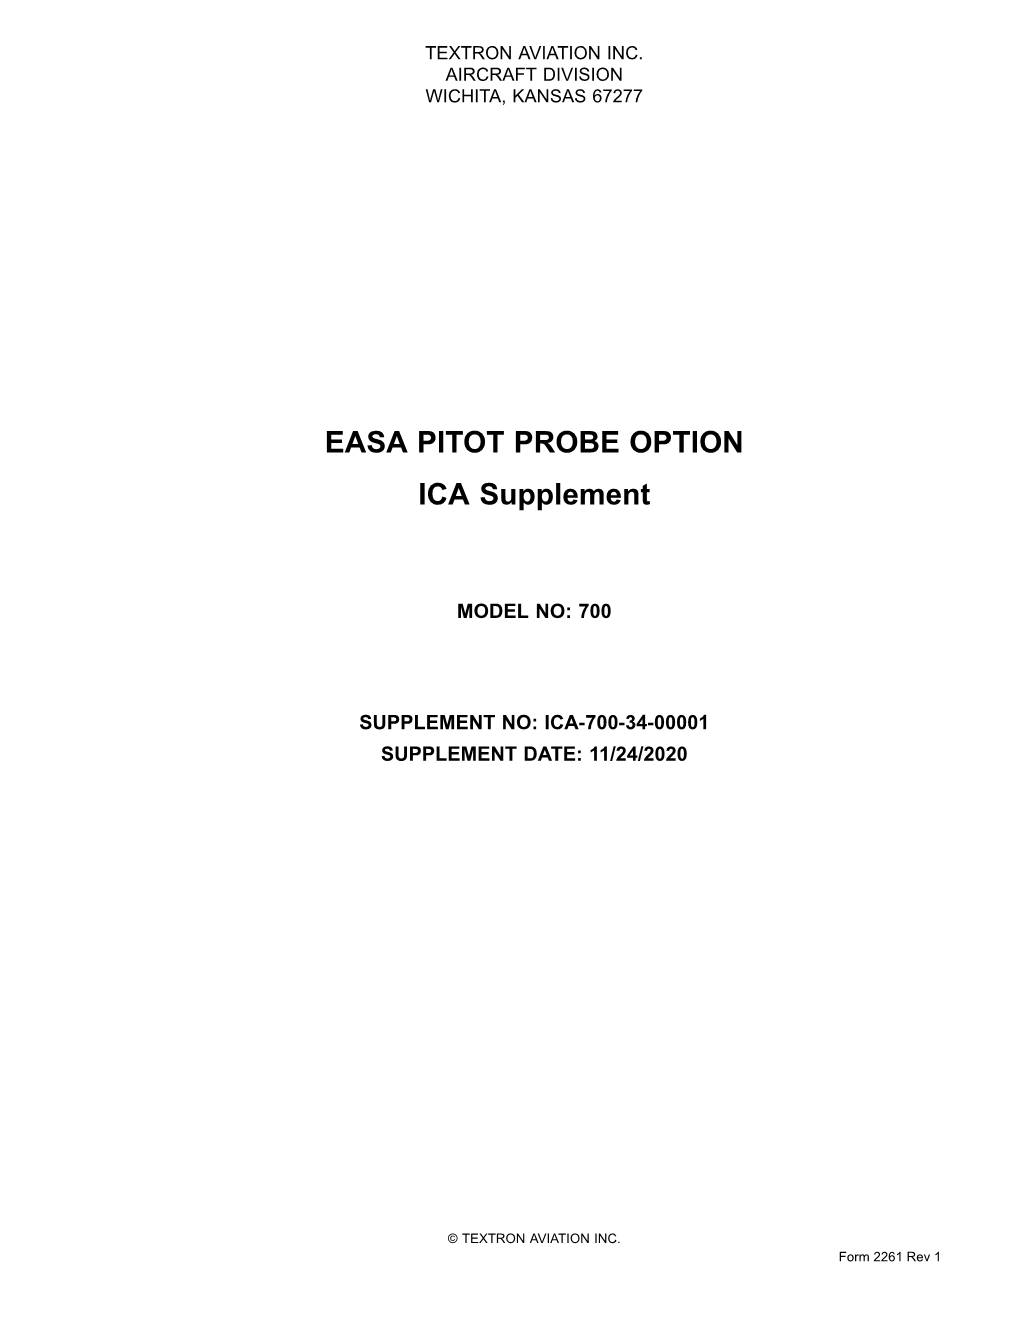 EASA PITOT PROBE OPTION ICA Supplement